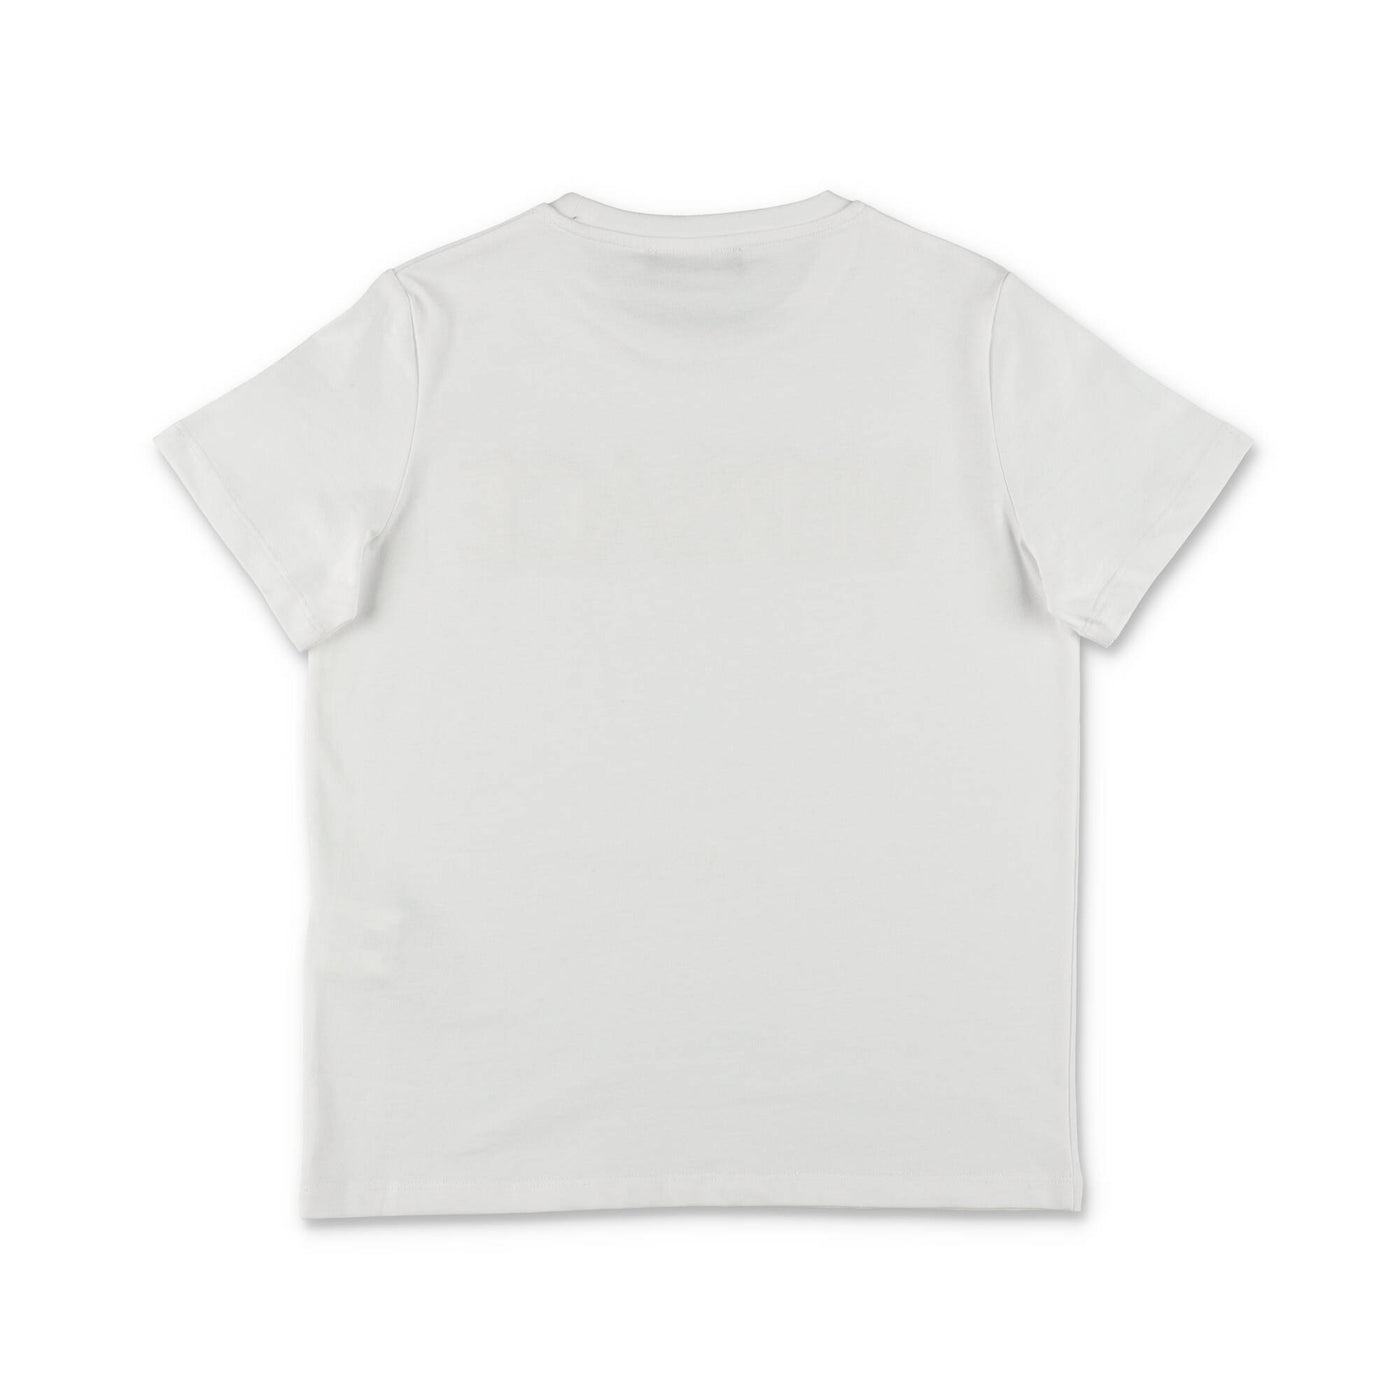 White cotton jersey boy VERSACE t-shirt